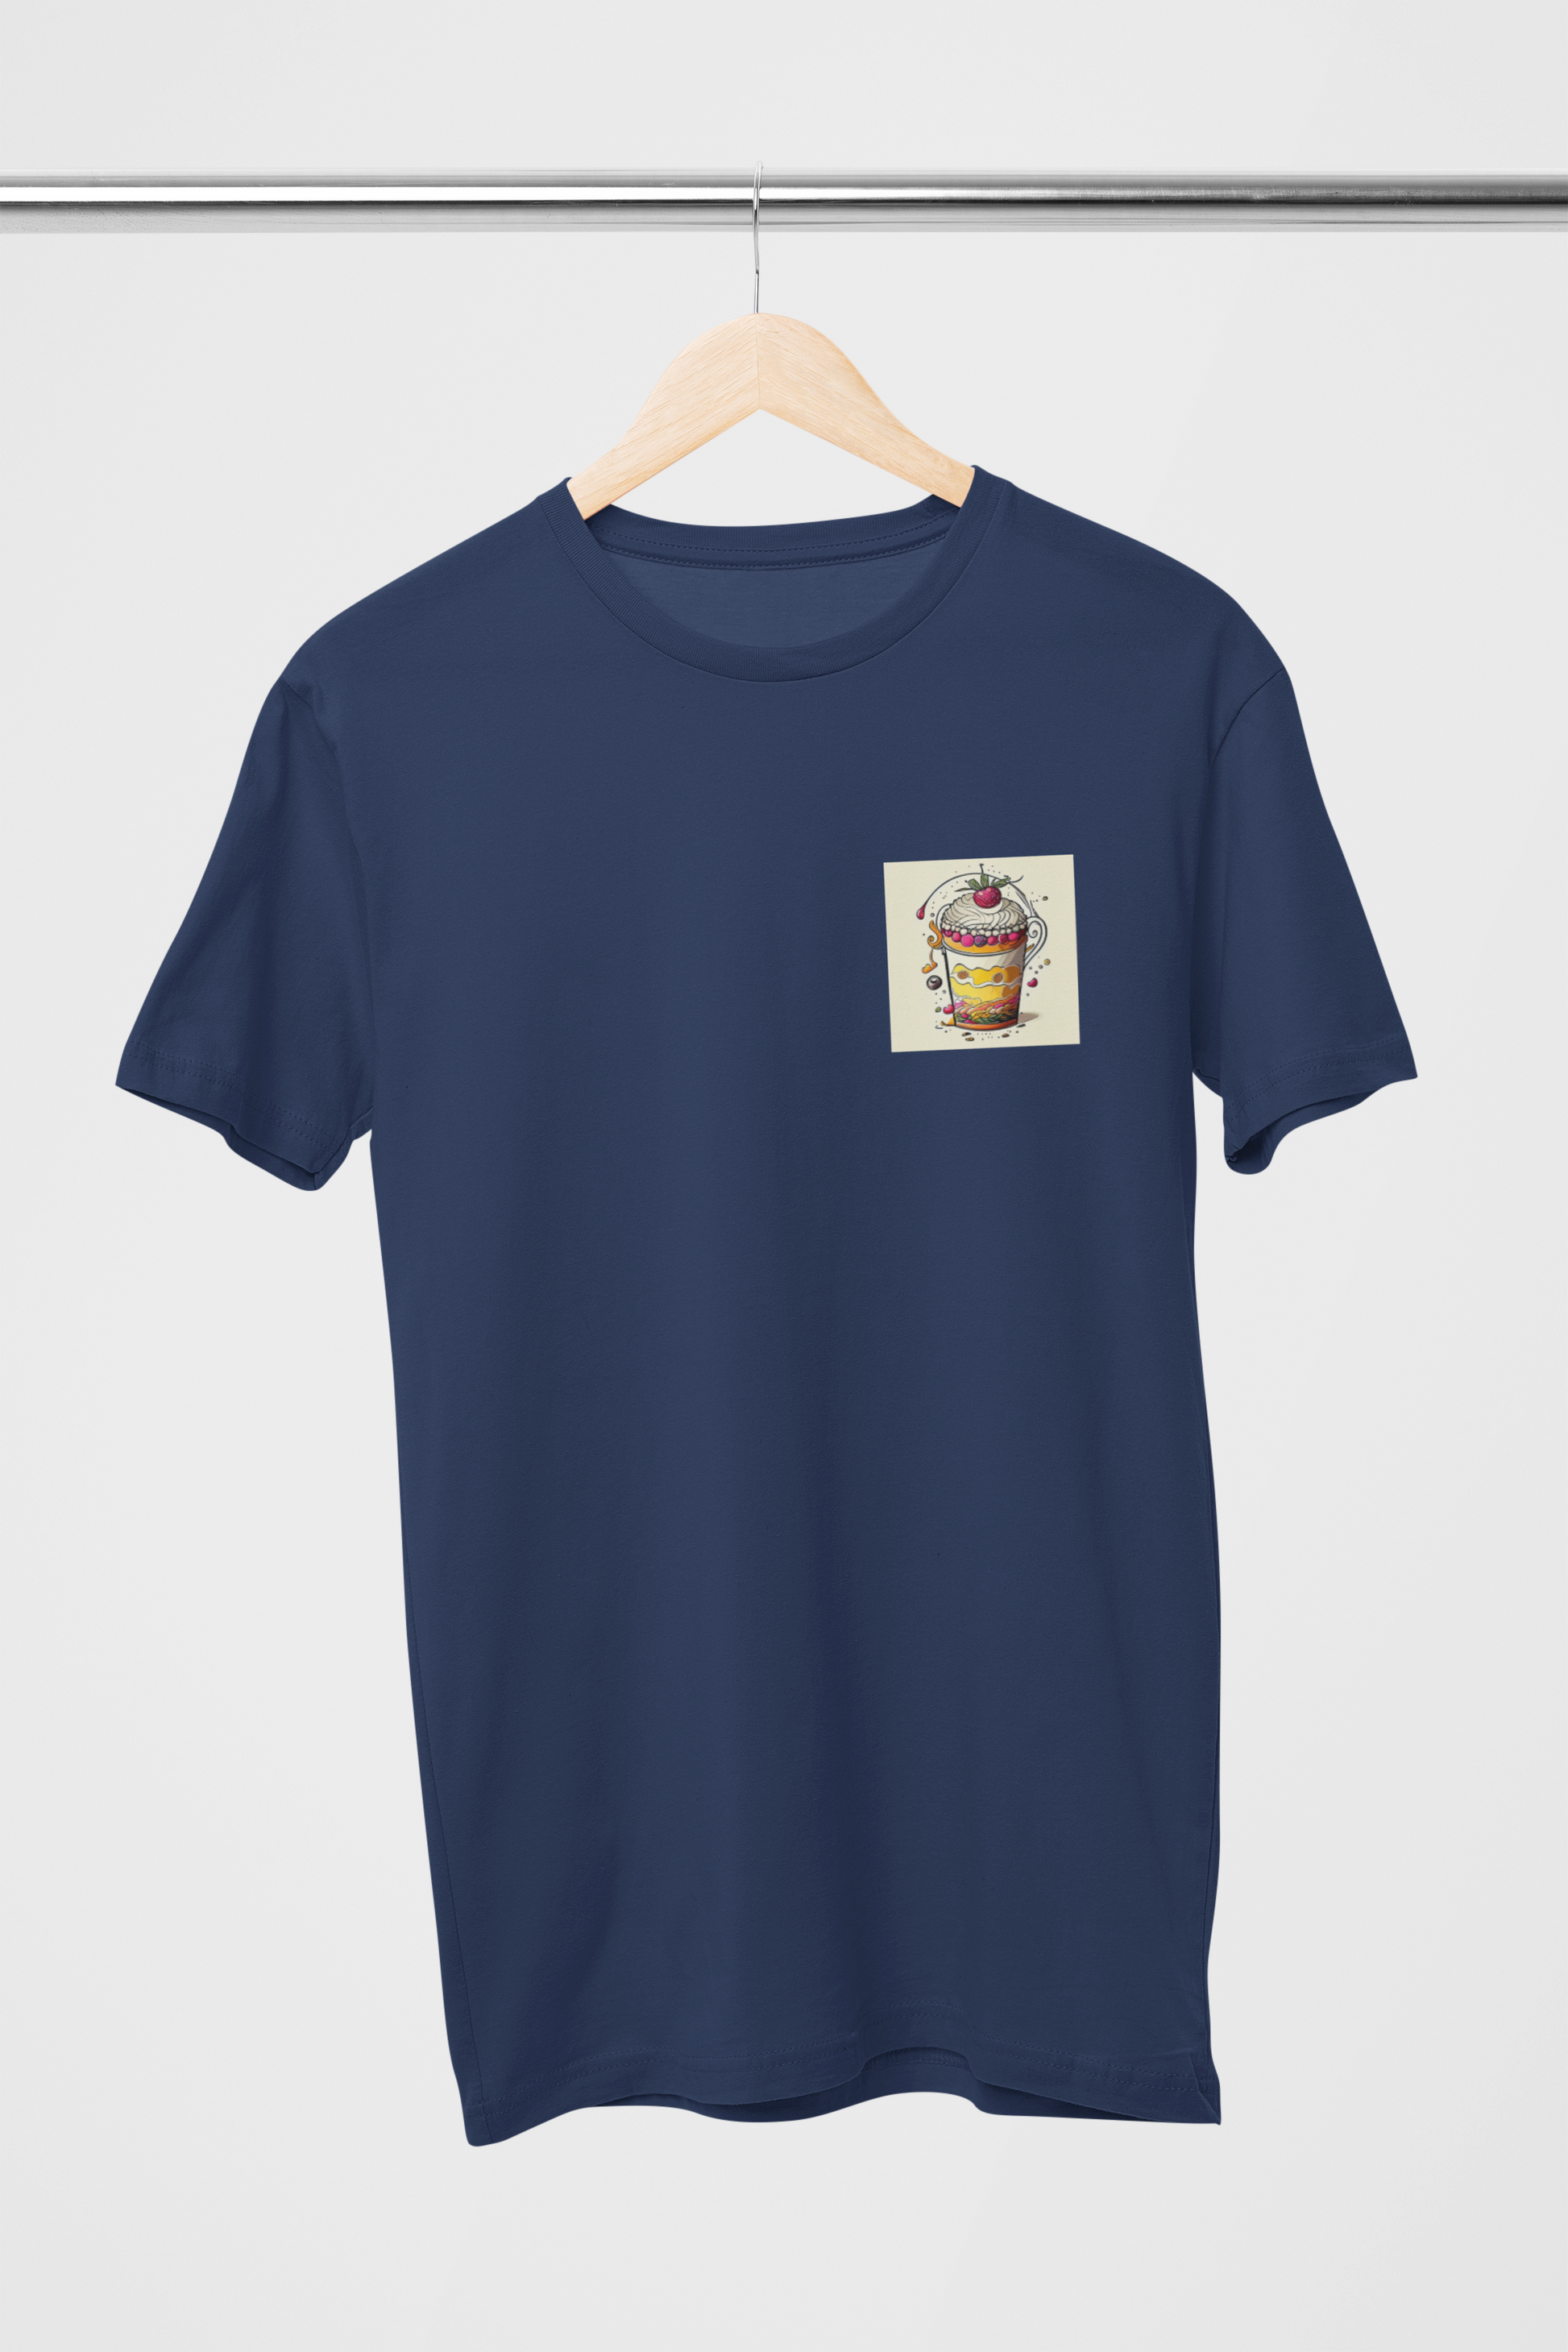 Pocket Dessert Cotton Navy Blue T-Shirt For Men | Masterchef Gurkirat Collection | ATOM